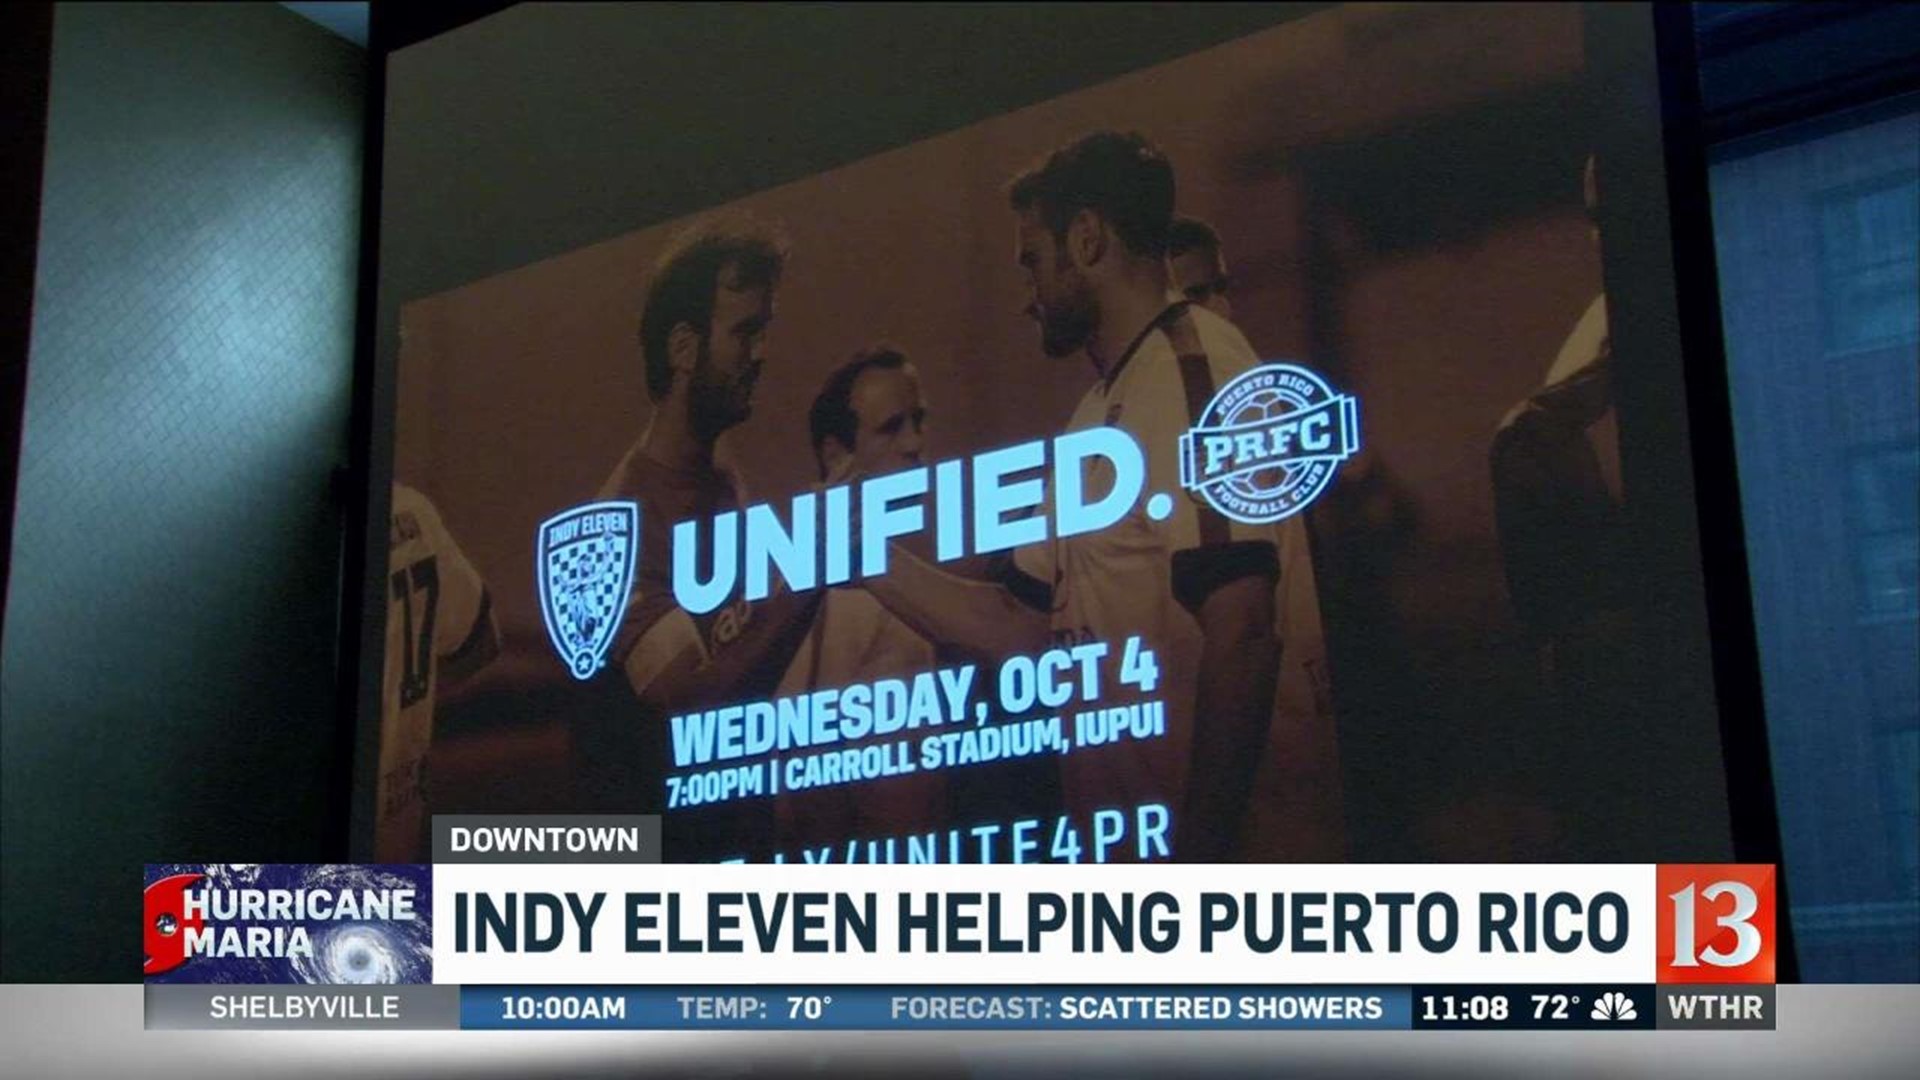 Indy Eleven helping Puerto Rico